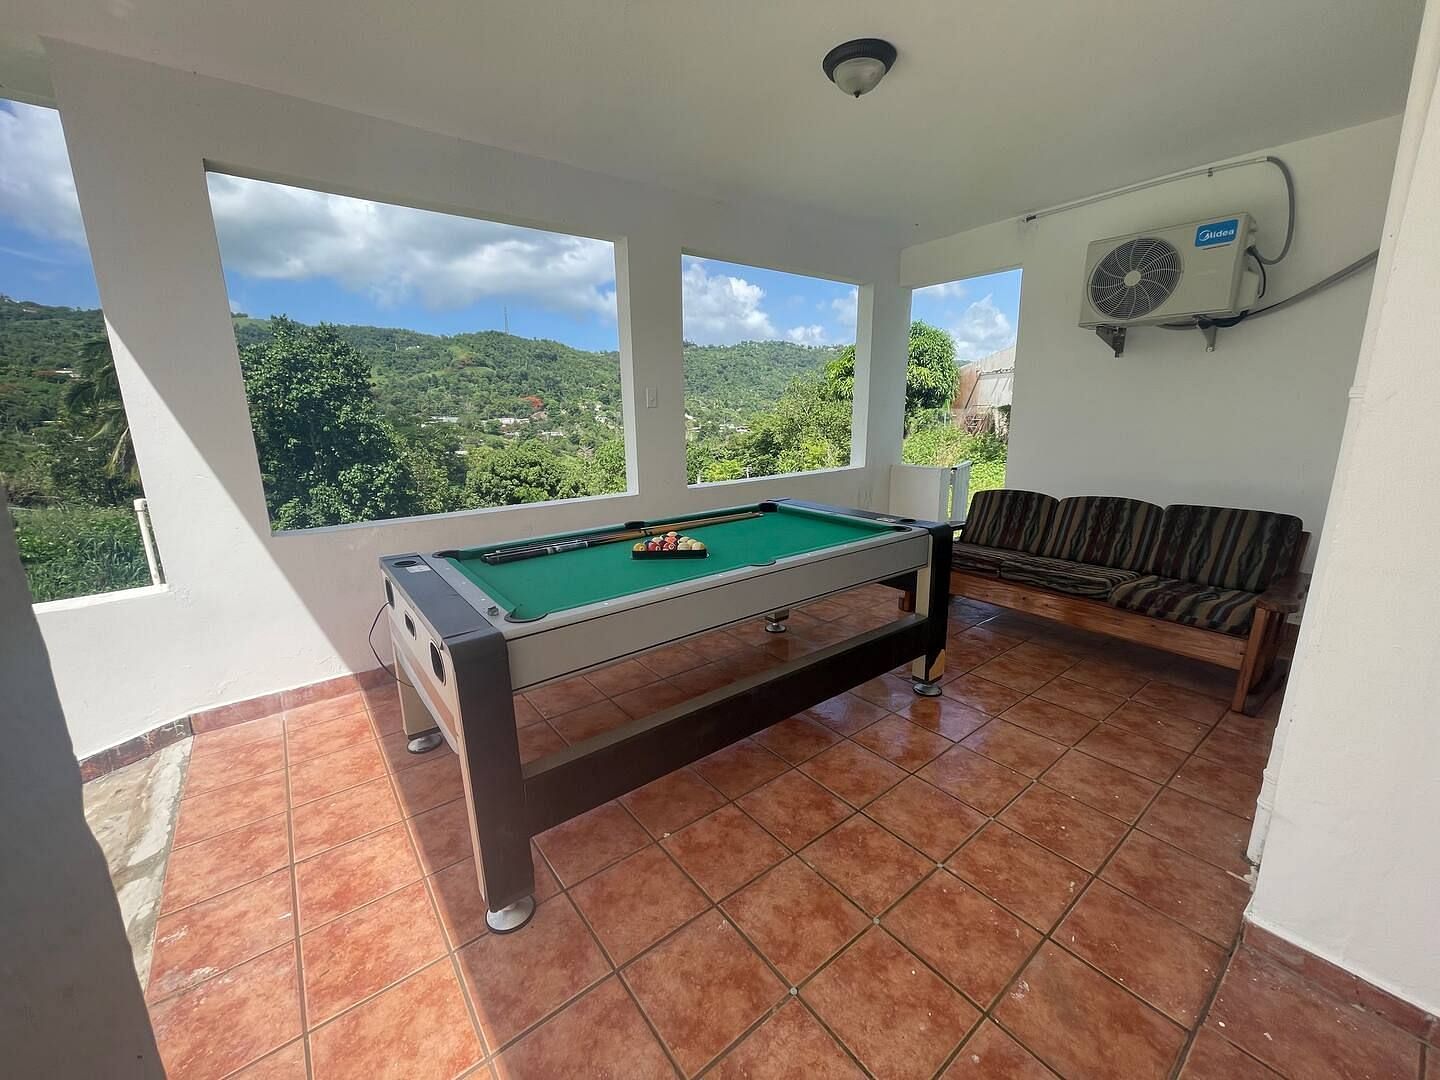 JWguest House at Trujillo Alto, Trujillo Alto | Fresh Mountain House with Pool Table | Jwbnb no brobnb 4